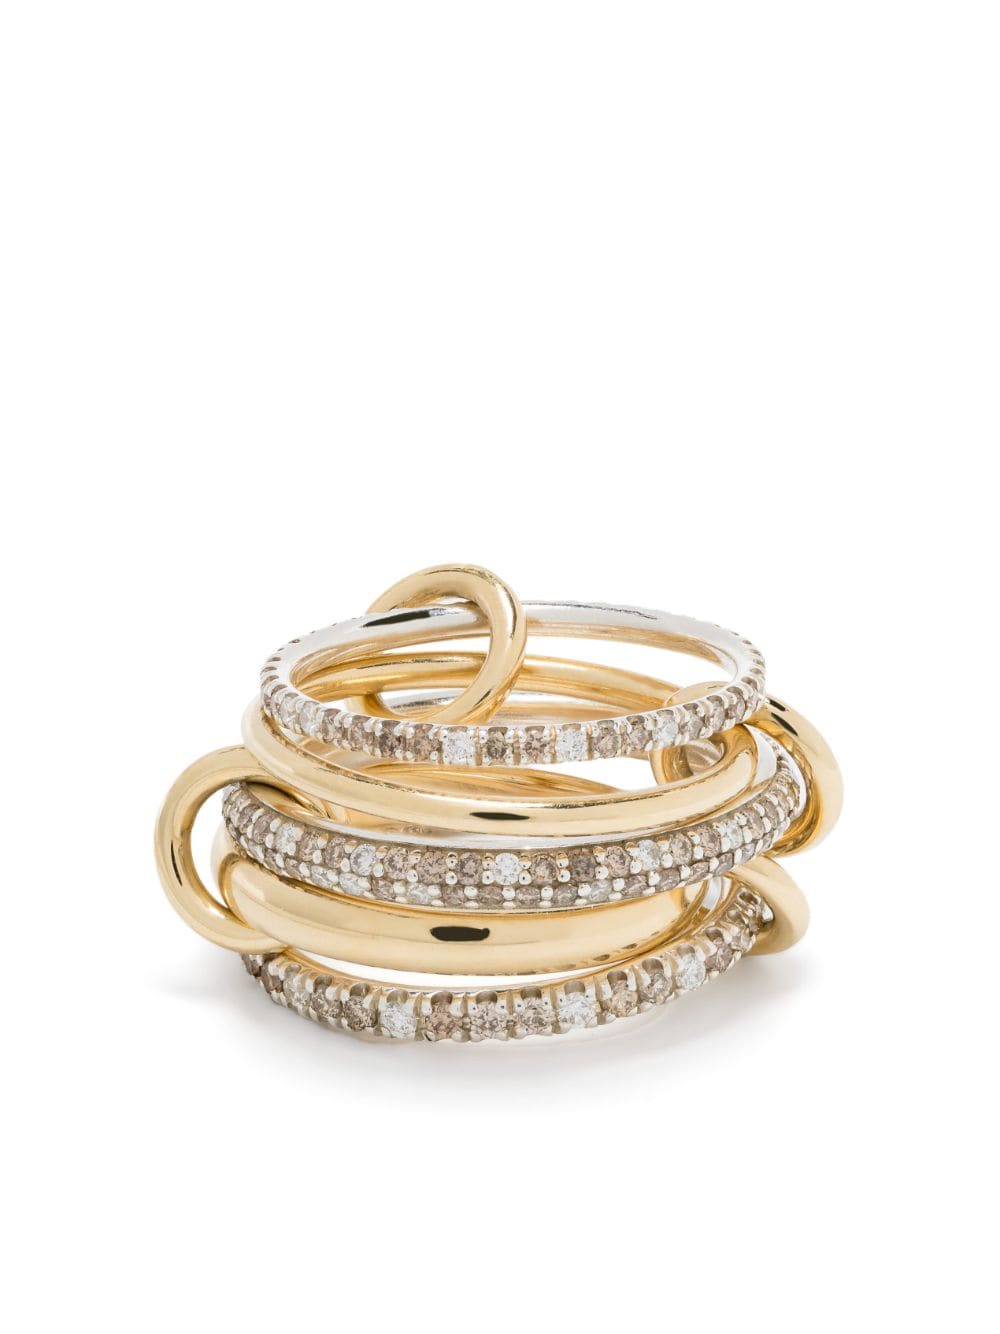 Spinelli Kilcollin 18k yellow gold and sterling silver Leo diamond ring von Spinelli Kilcollin